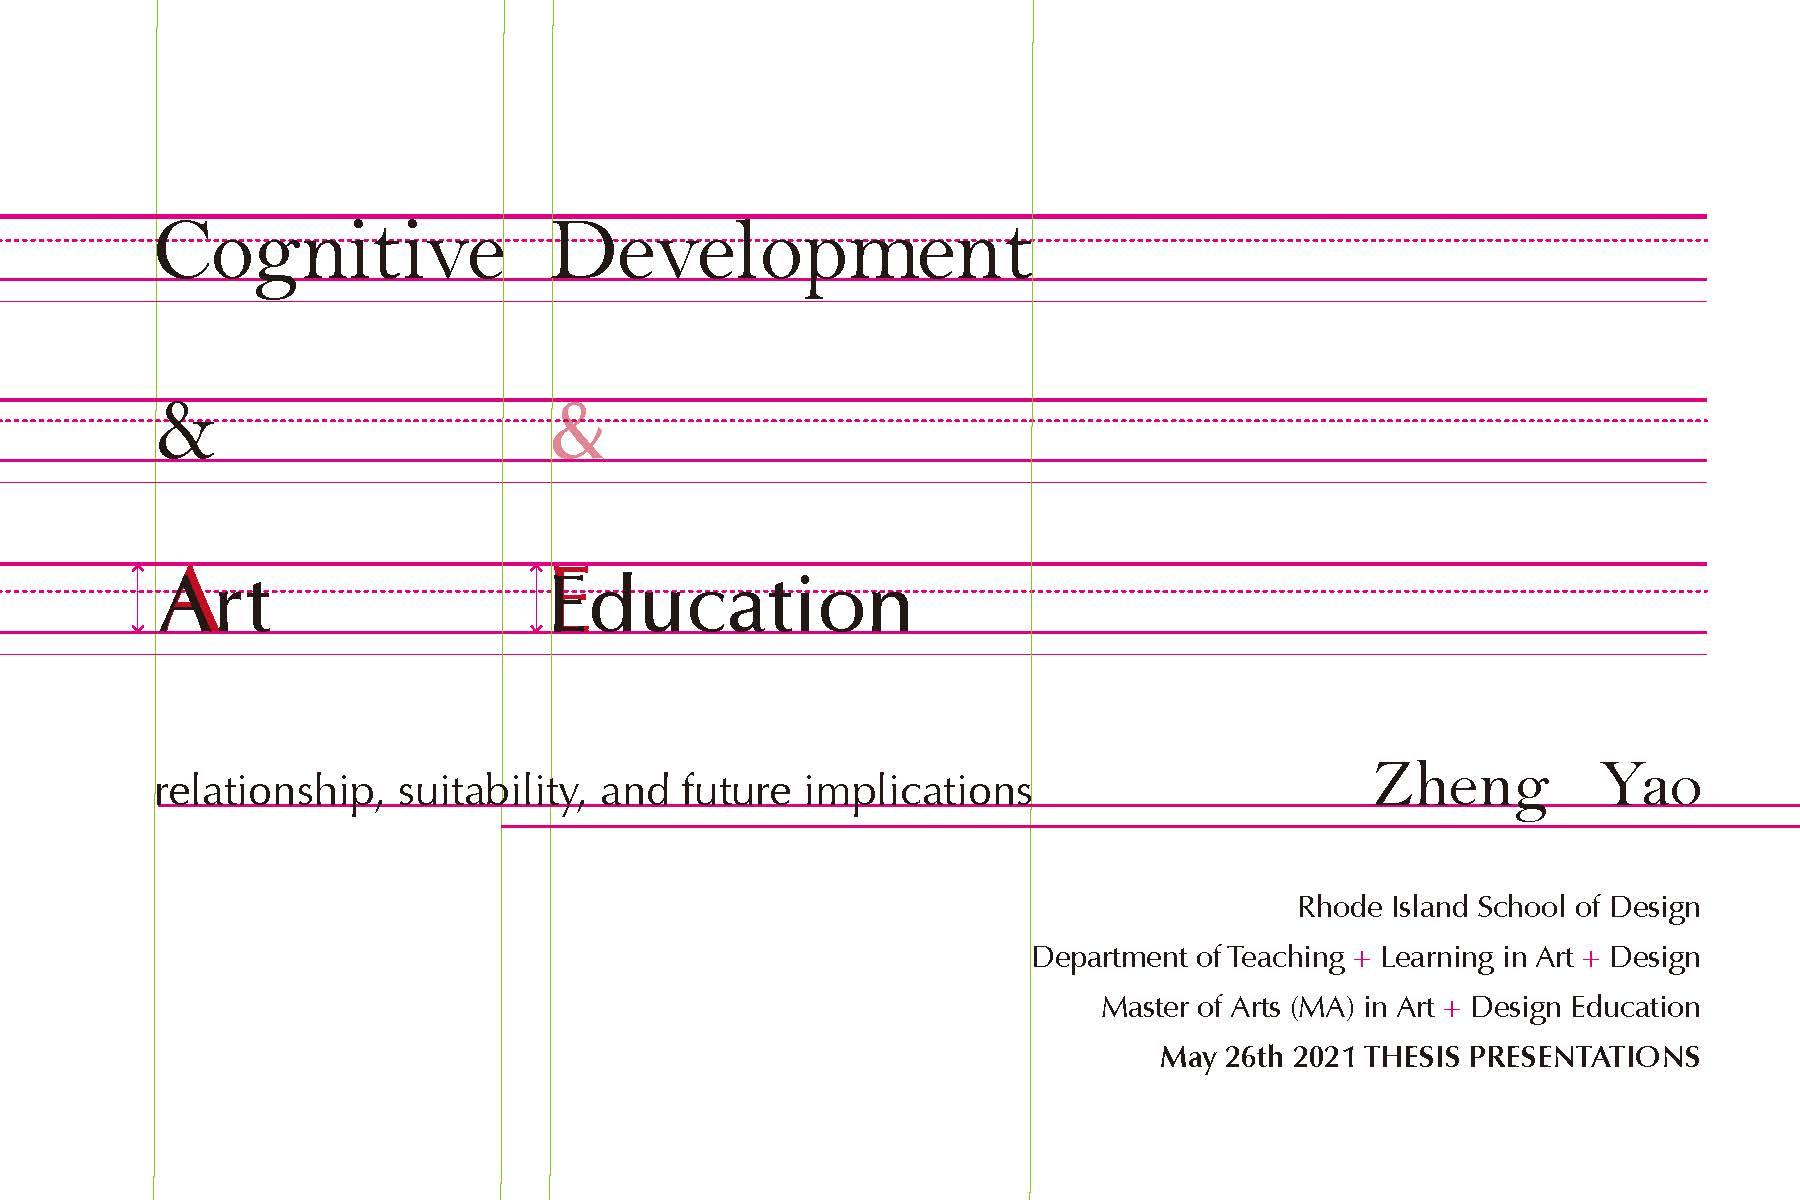 Thesis Title: Cognitive Development & Art Education: relationship, suitability, and future implications